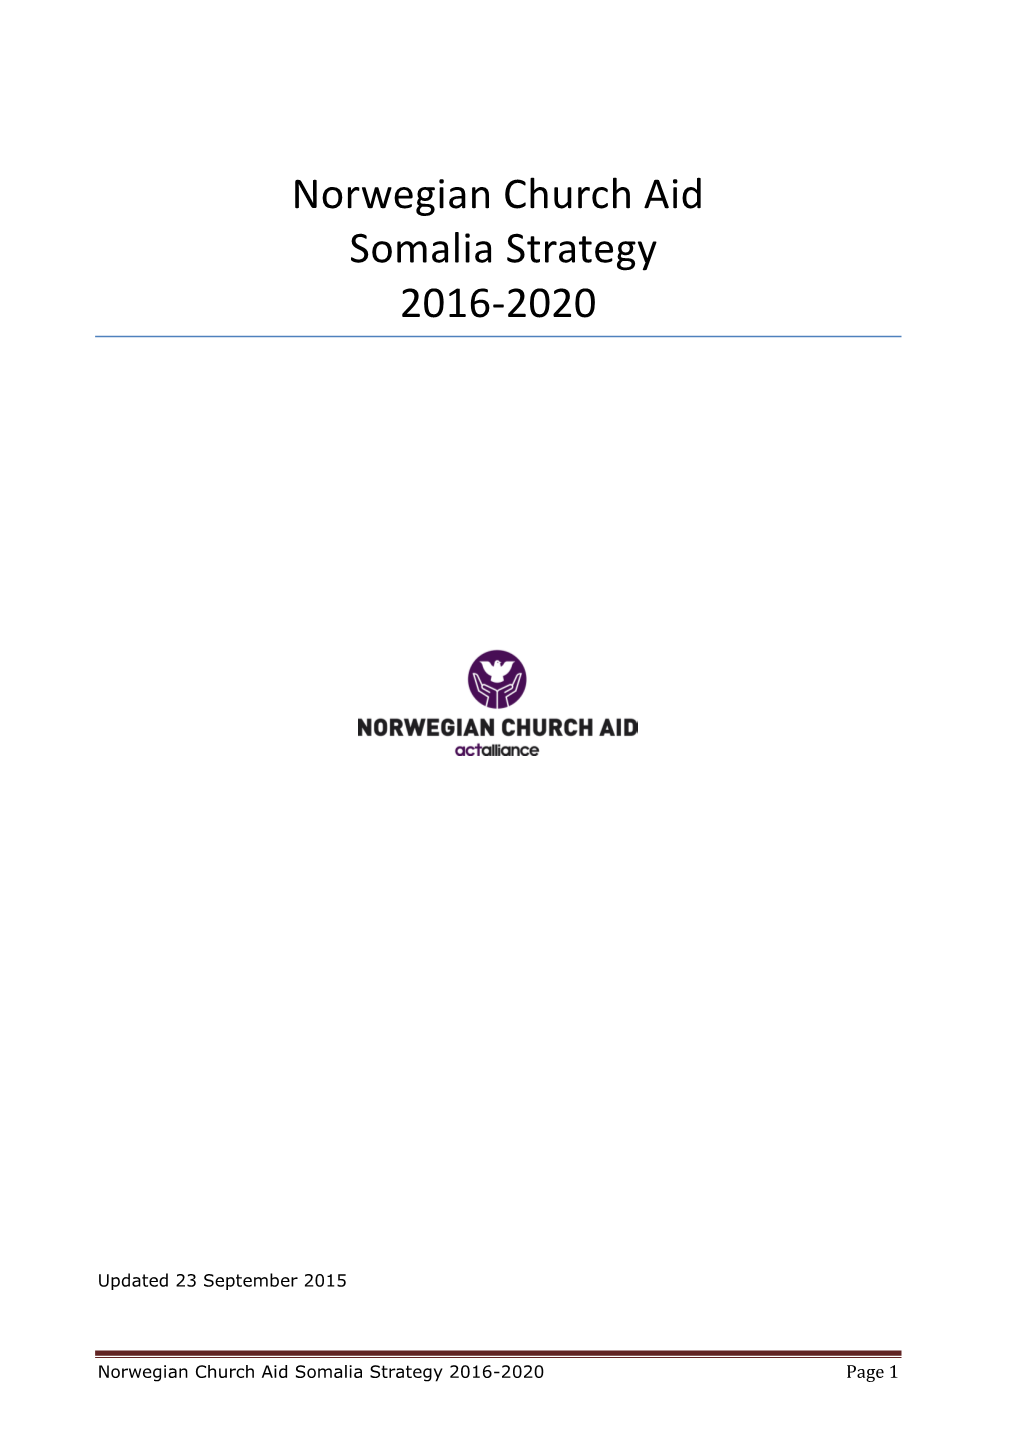 Norwegian Church Aid Somalia Strategy 2016-2020